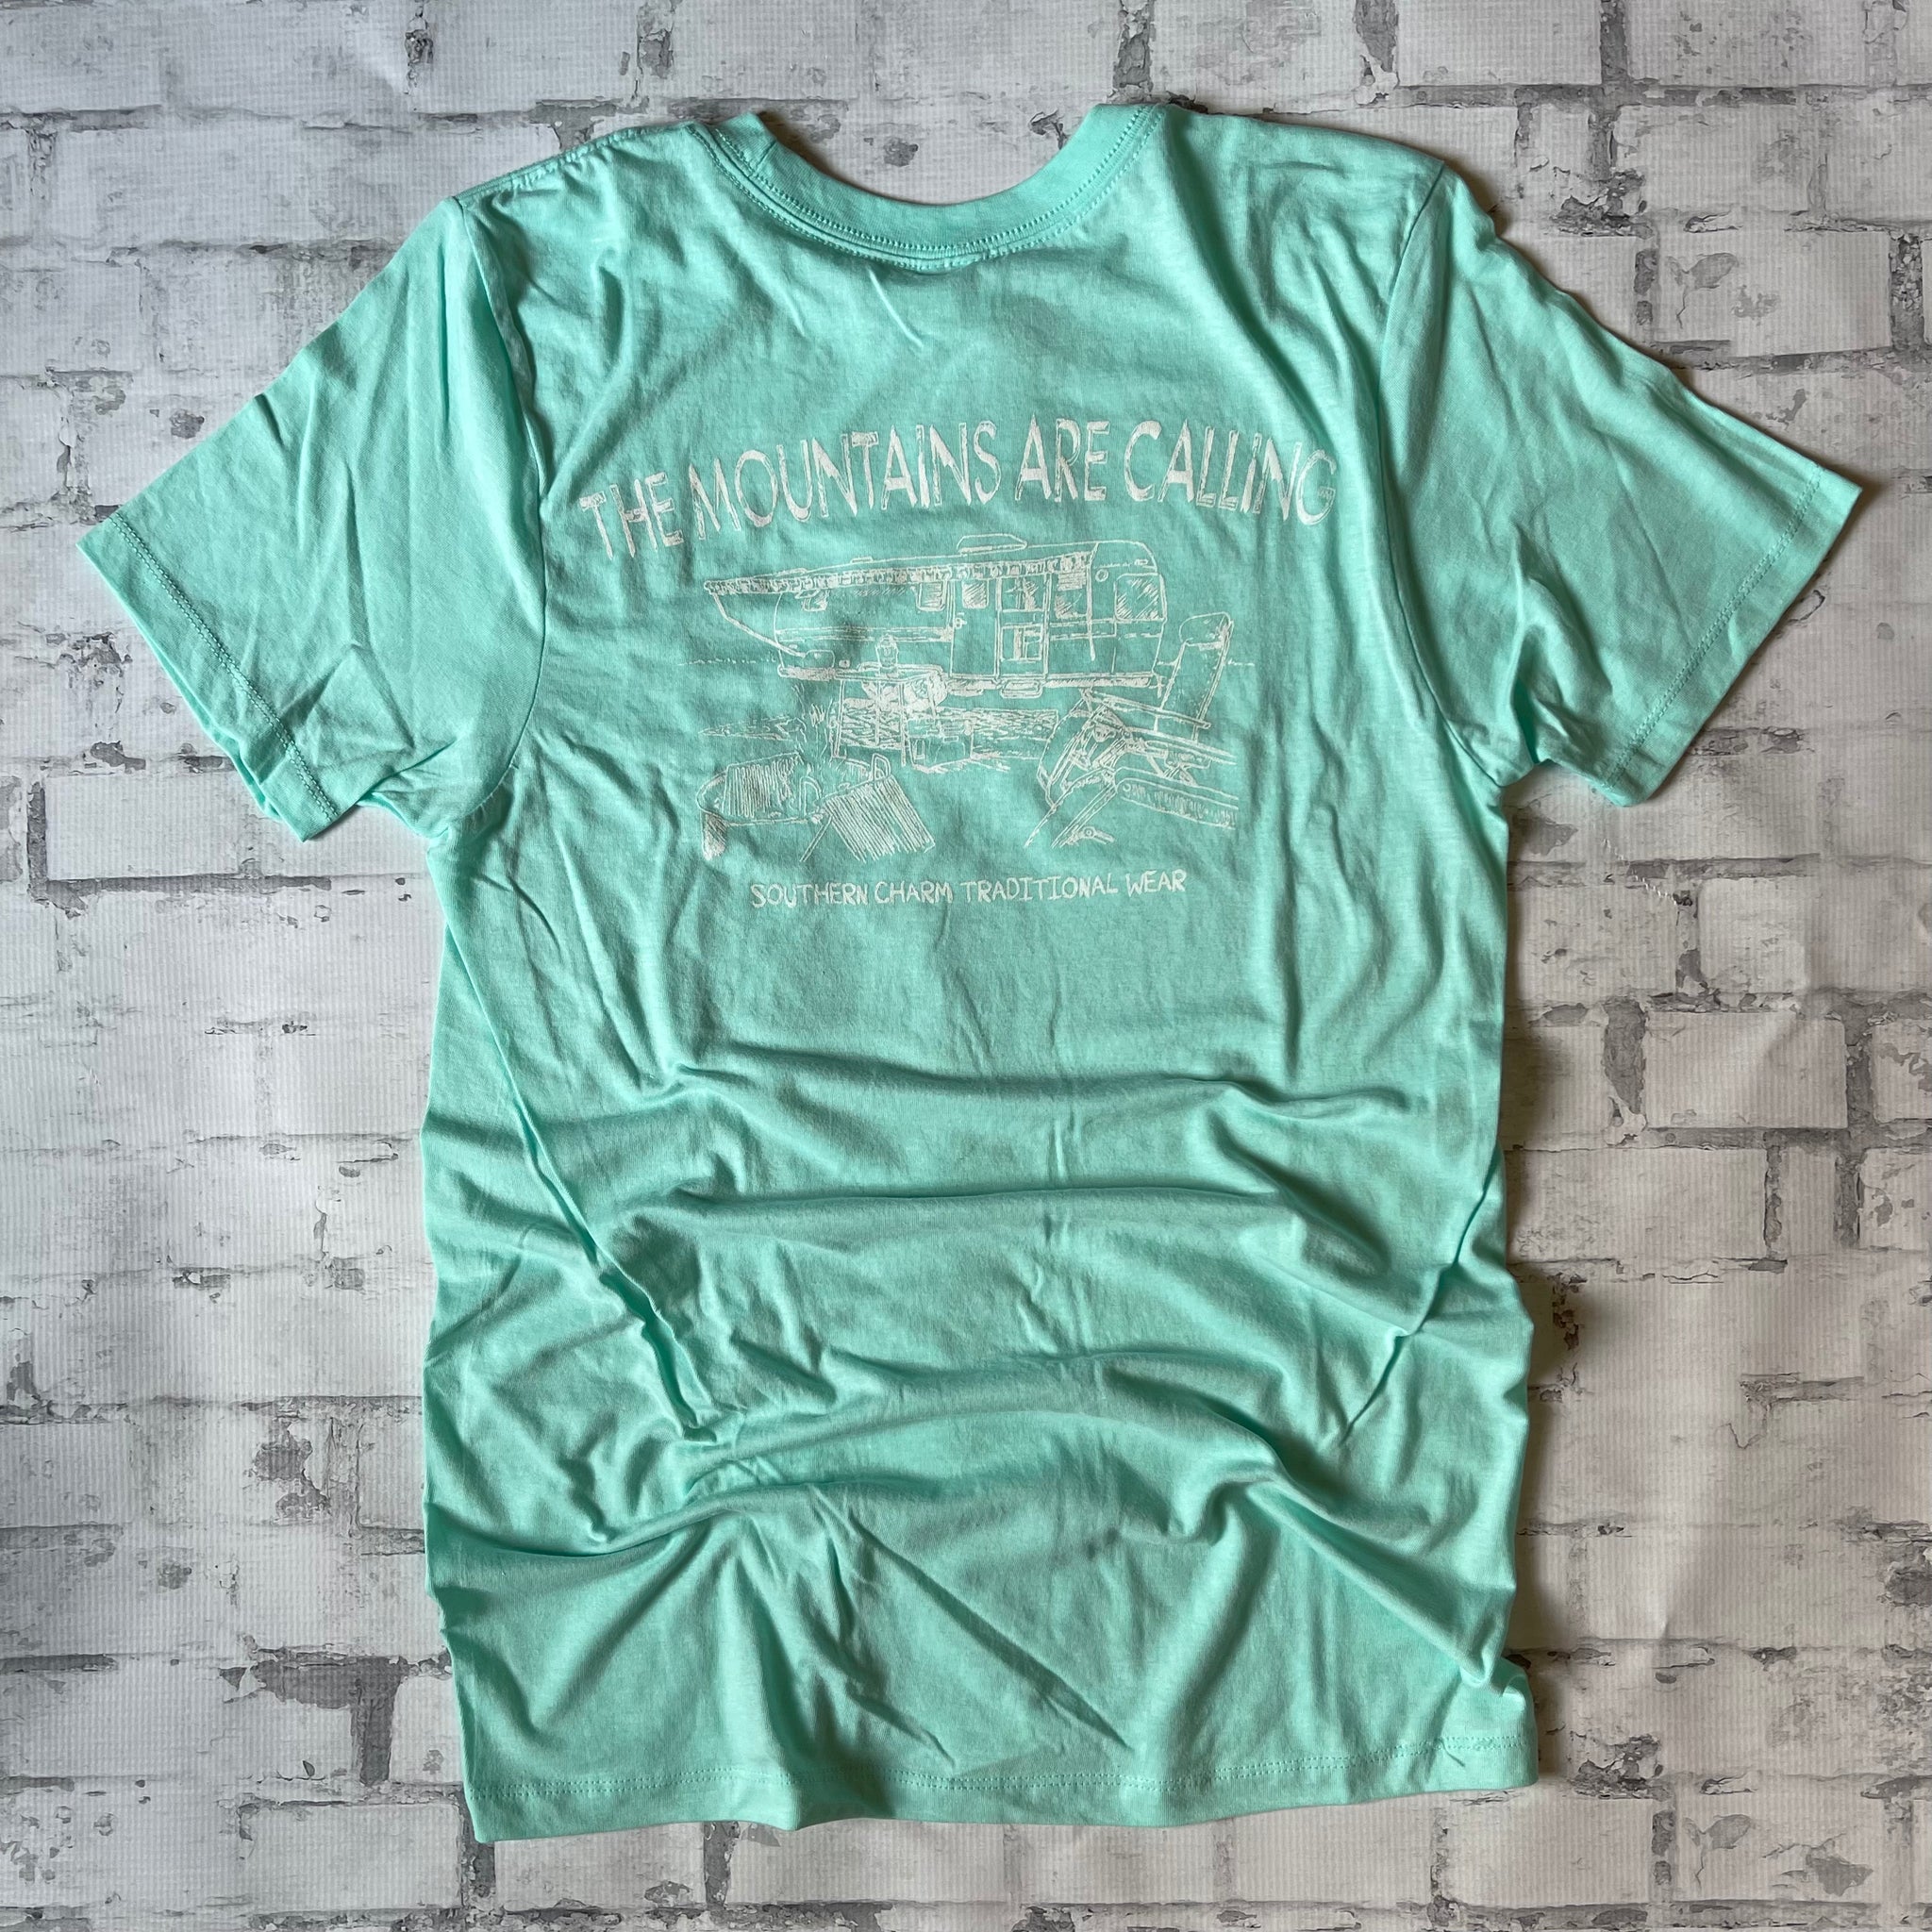 Southern Charm "Loretta Camp" Short Sleeve T-shirt - Mint - Southern Charm "Shop The Charm"